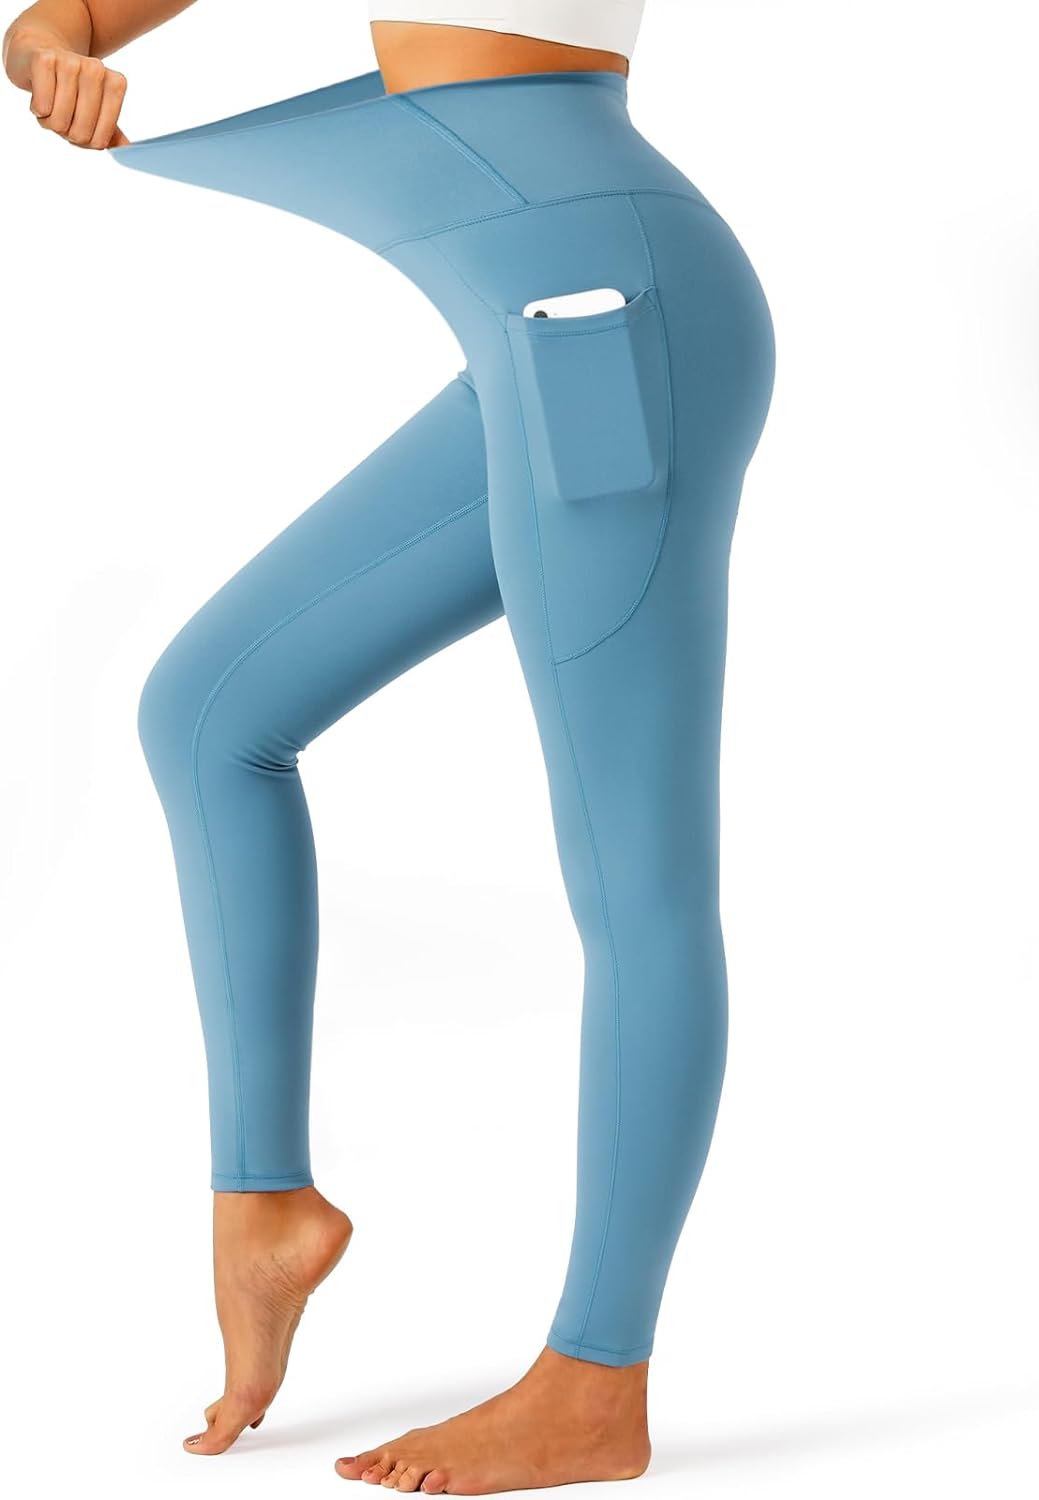 YOYOYOGA Yoga Leggings for Women Carbon Finishing High Waisted Yoga Pants with Pockets Workout Running Legging